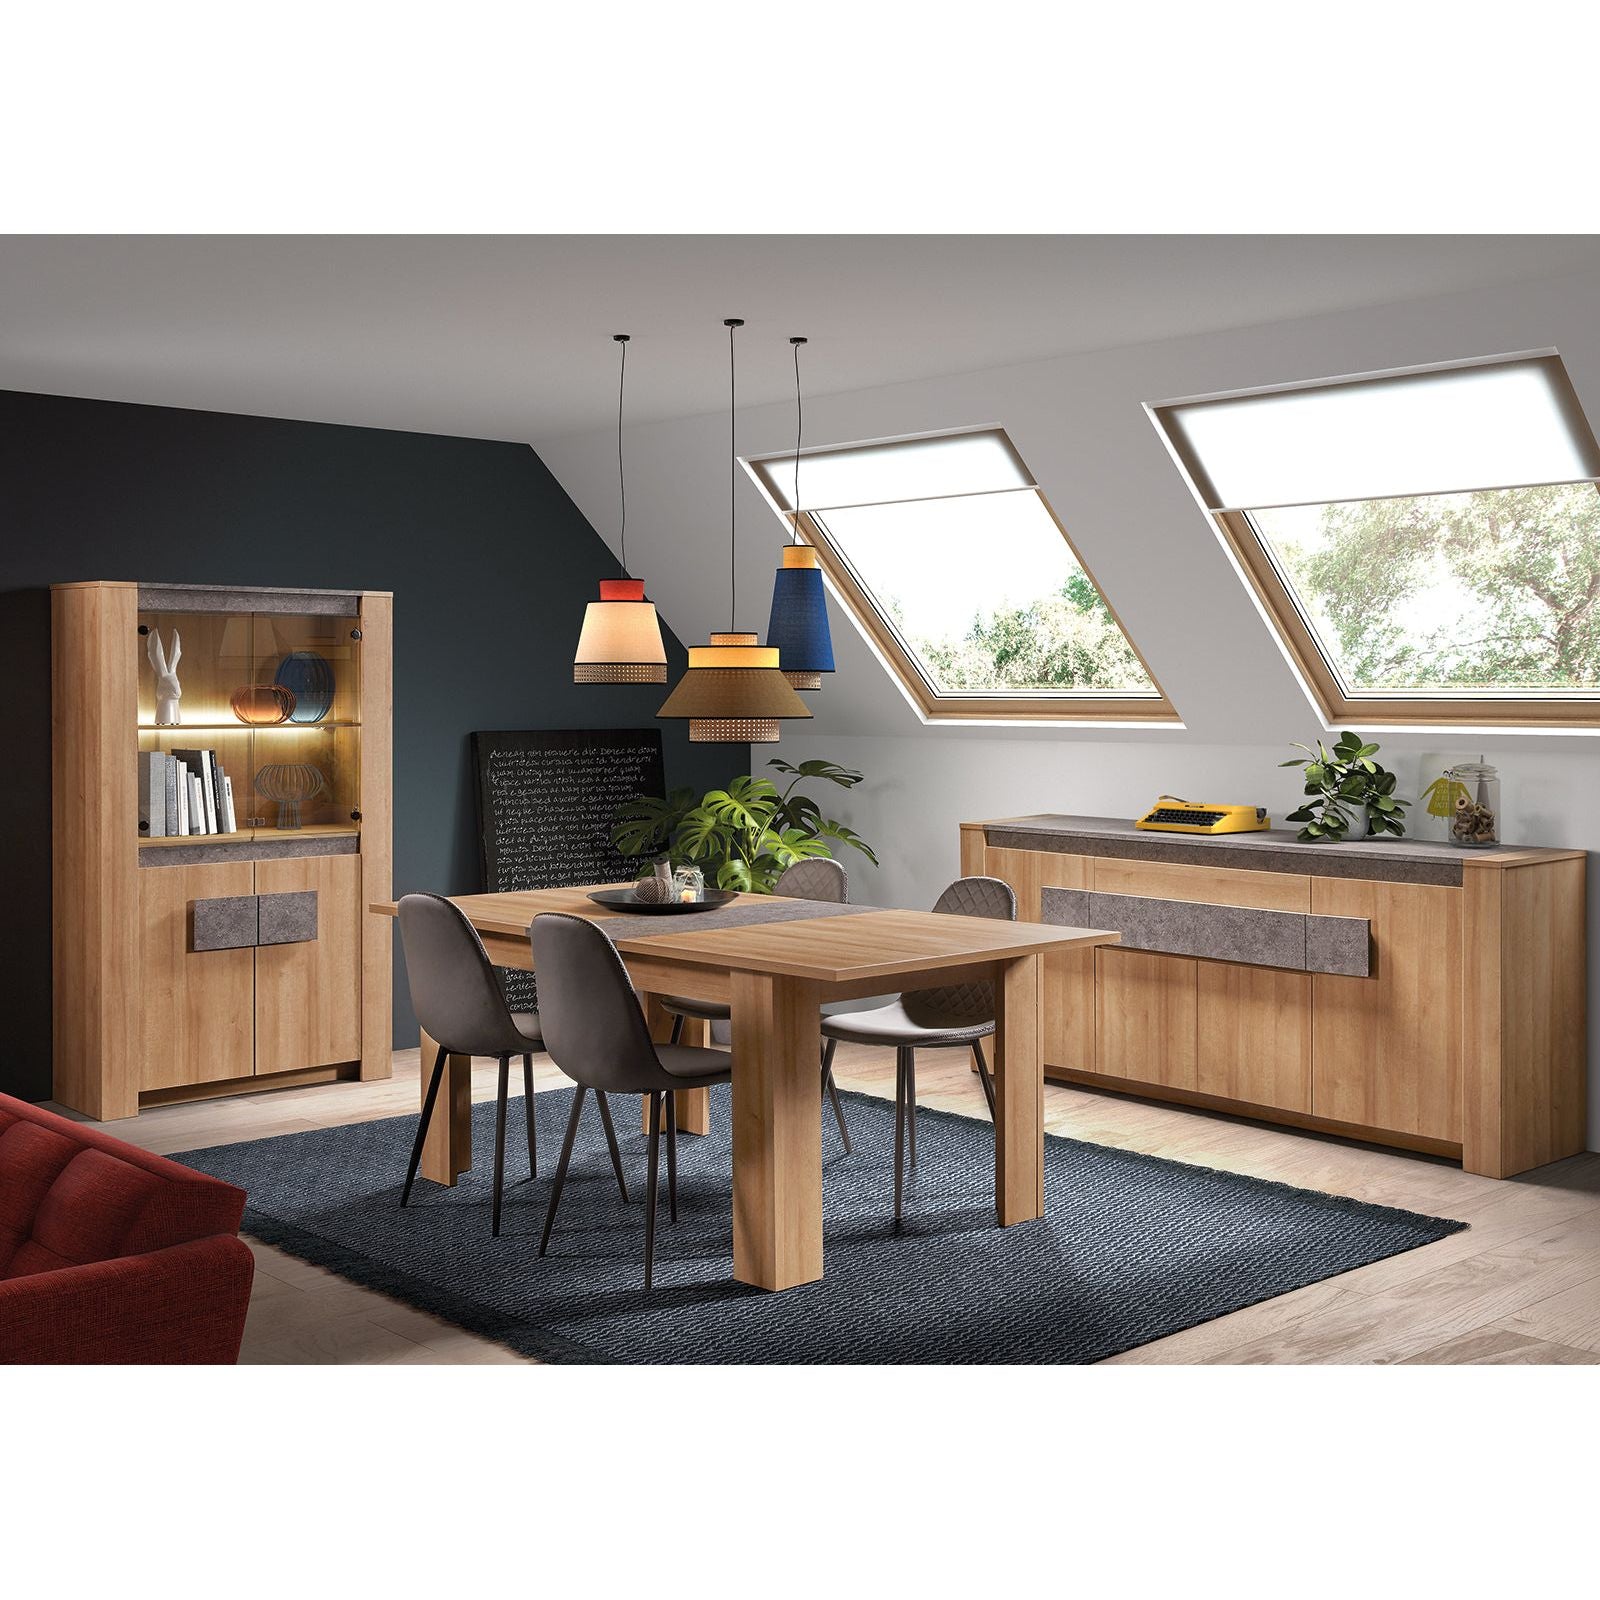 Dining table | Furniture series Ariya | brown, natural, light gray |